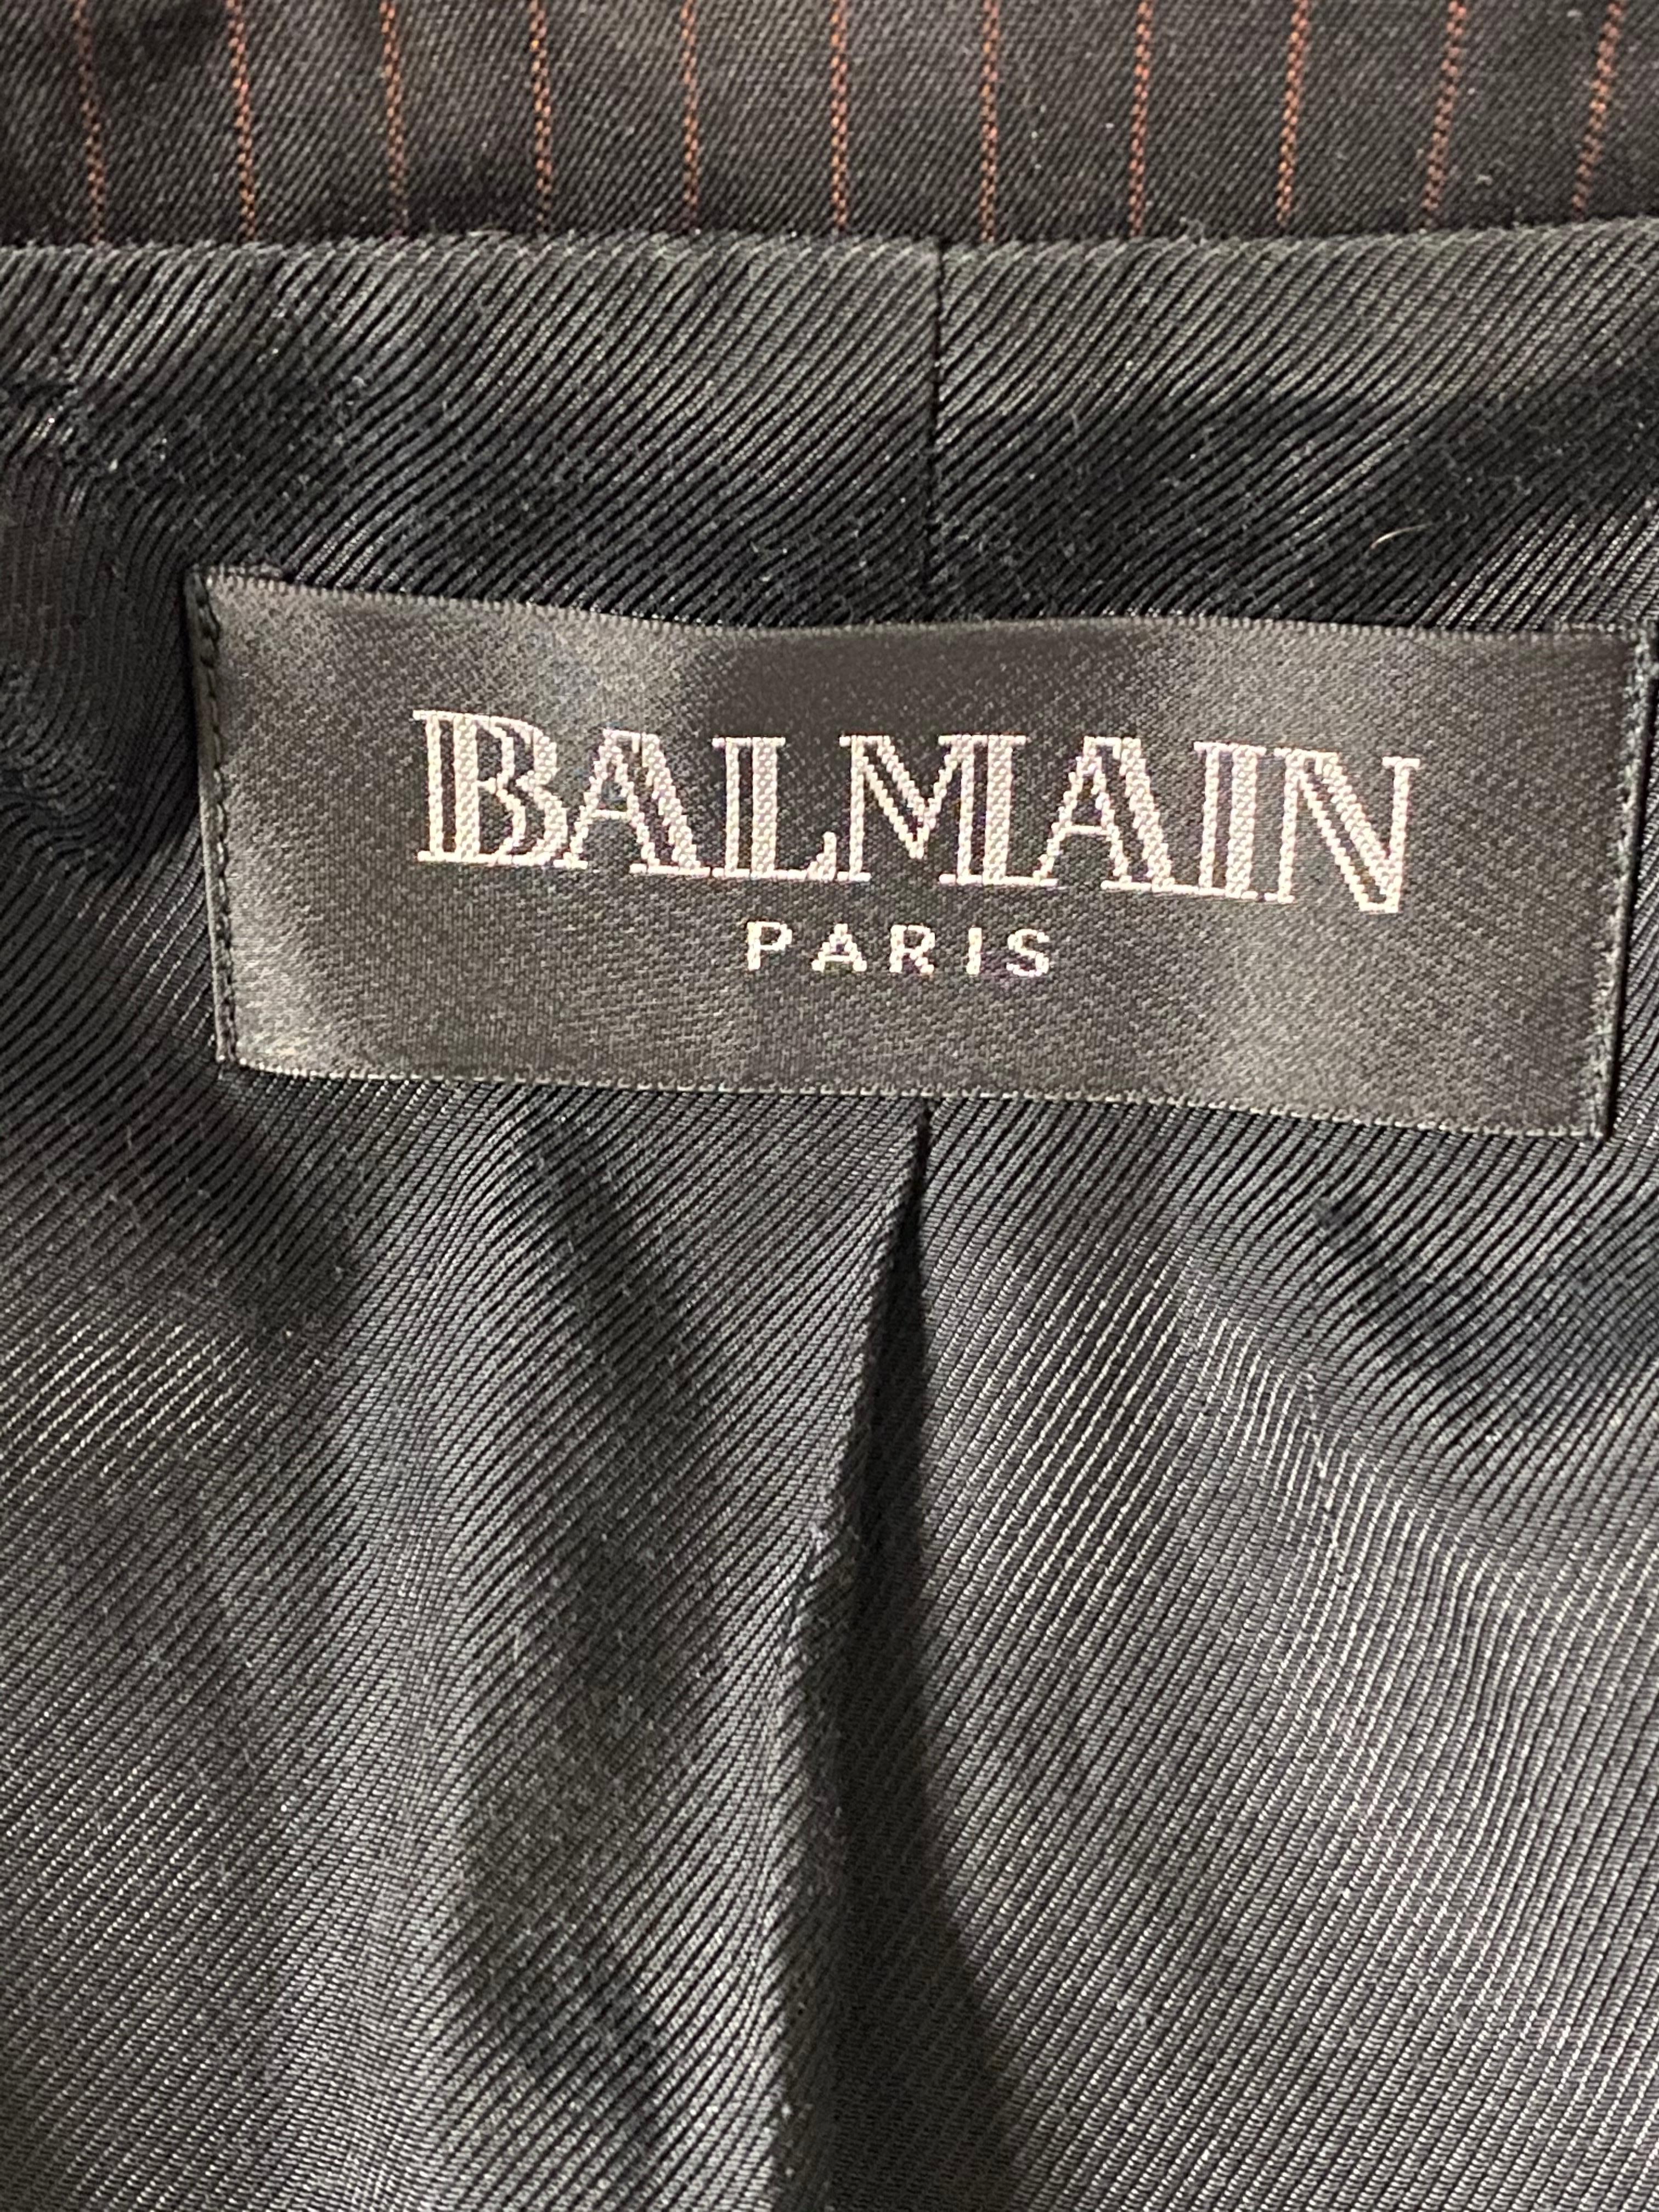 Balmain Paris Black Tuxedo Blazer Jacket Size 40 For Sale 7